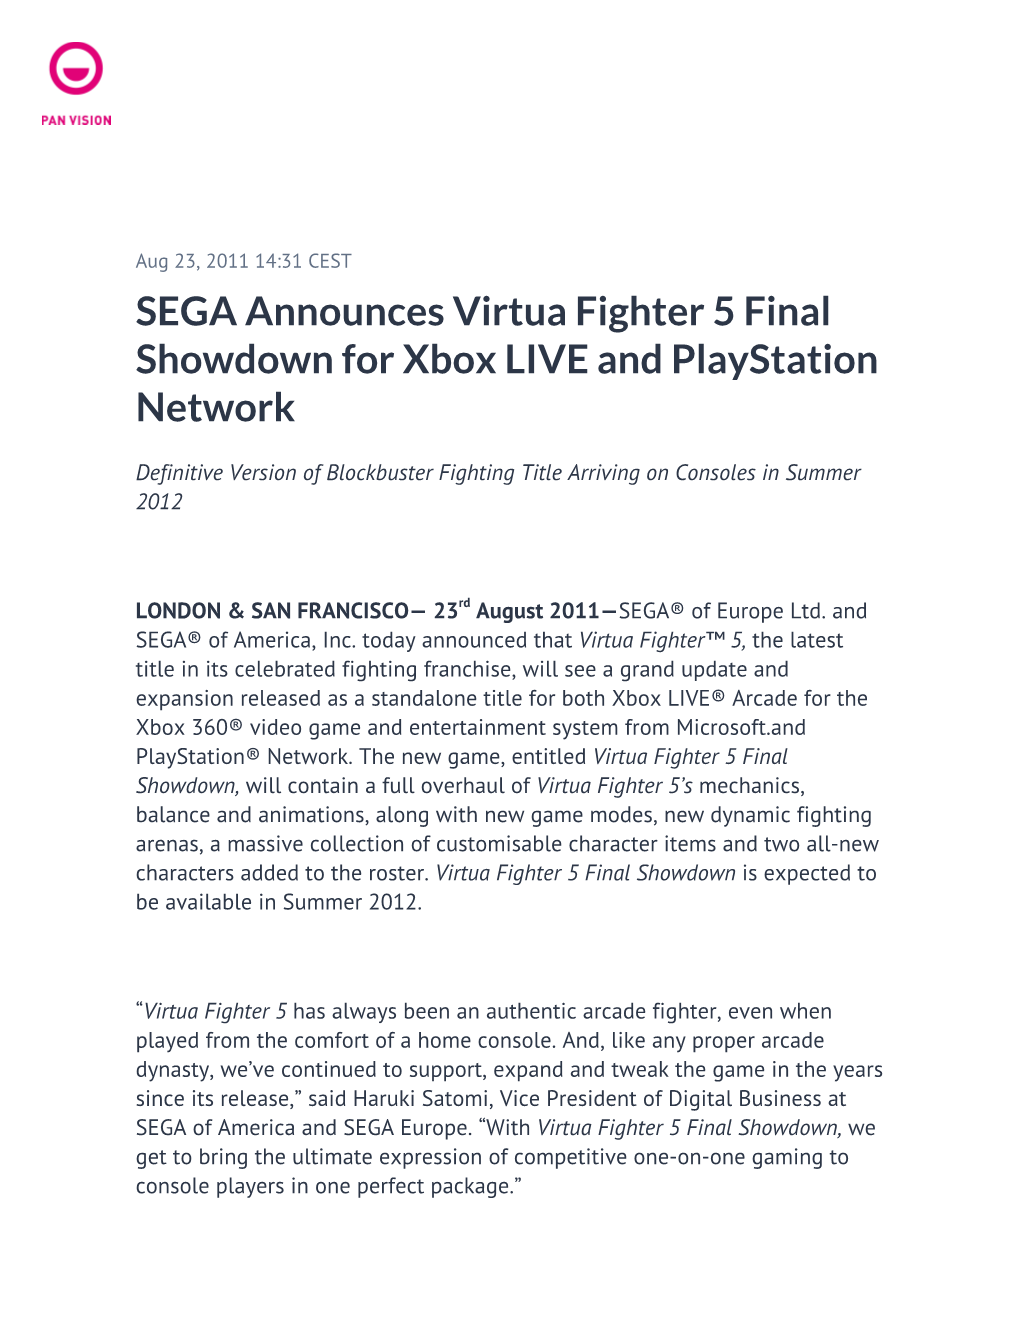 SEGA Announces Virtua Fighter 5 Final Showdown for Xbox LIVE and Playstation Network